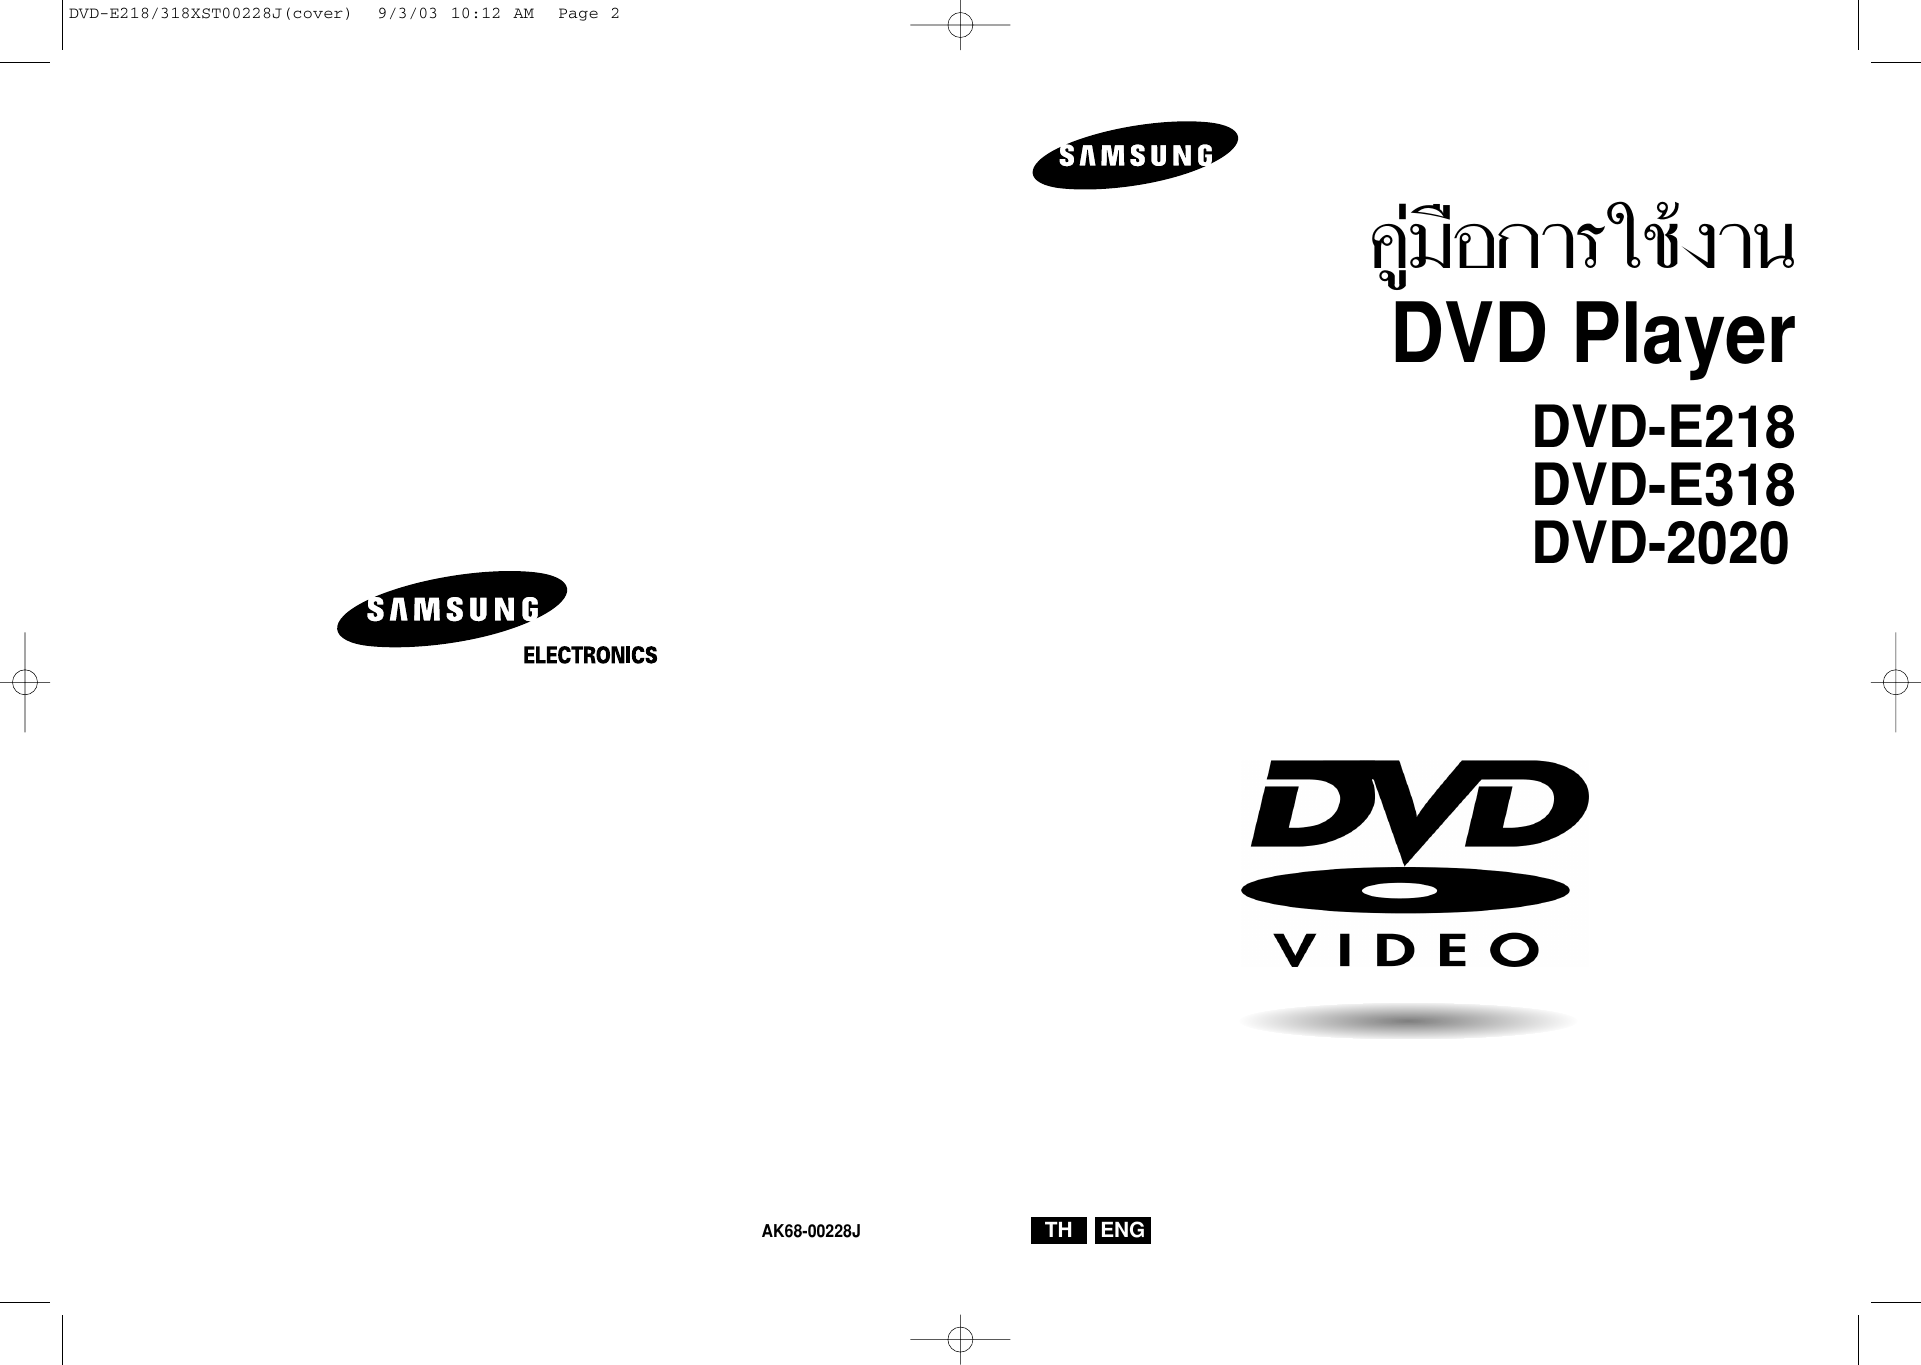 Samsung Dvd E218 318xst00228j Cover E218 20030905085755093 E218xst Th